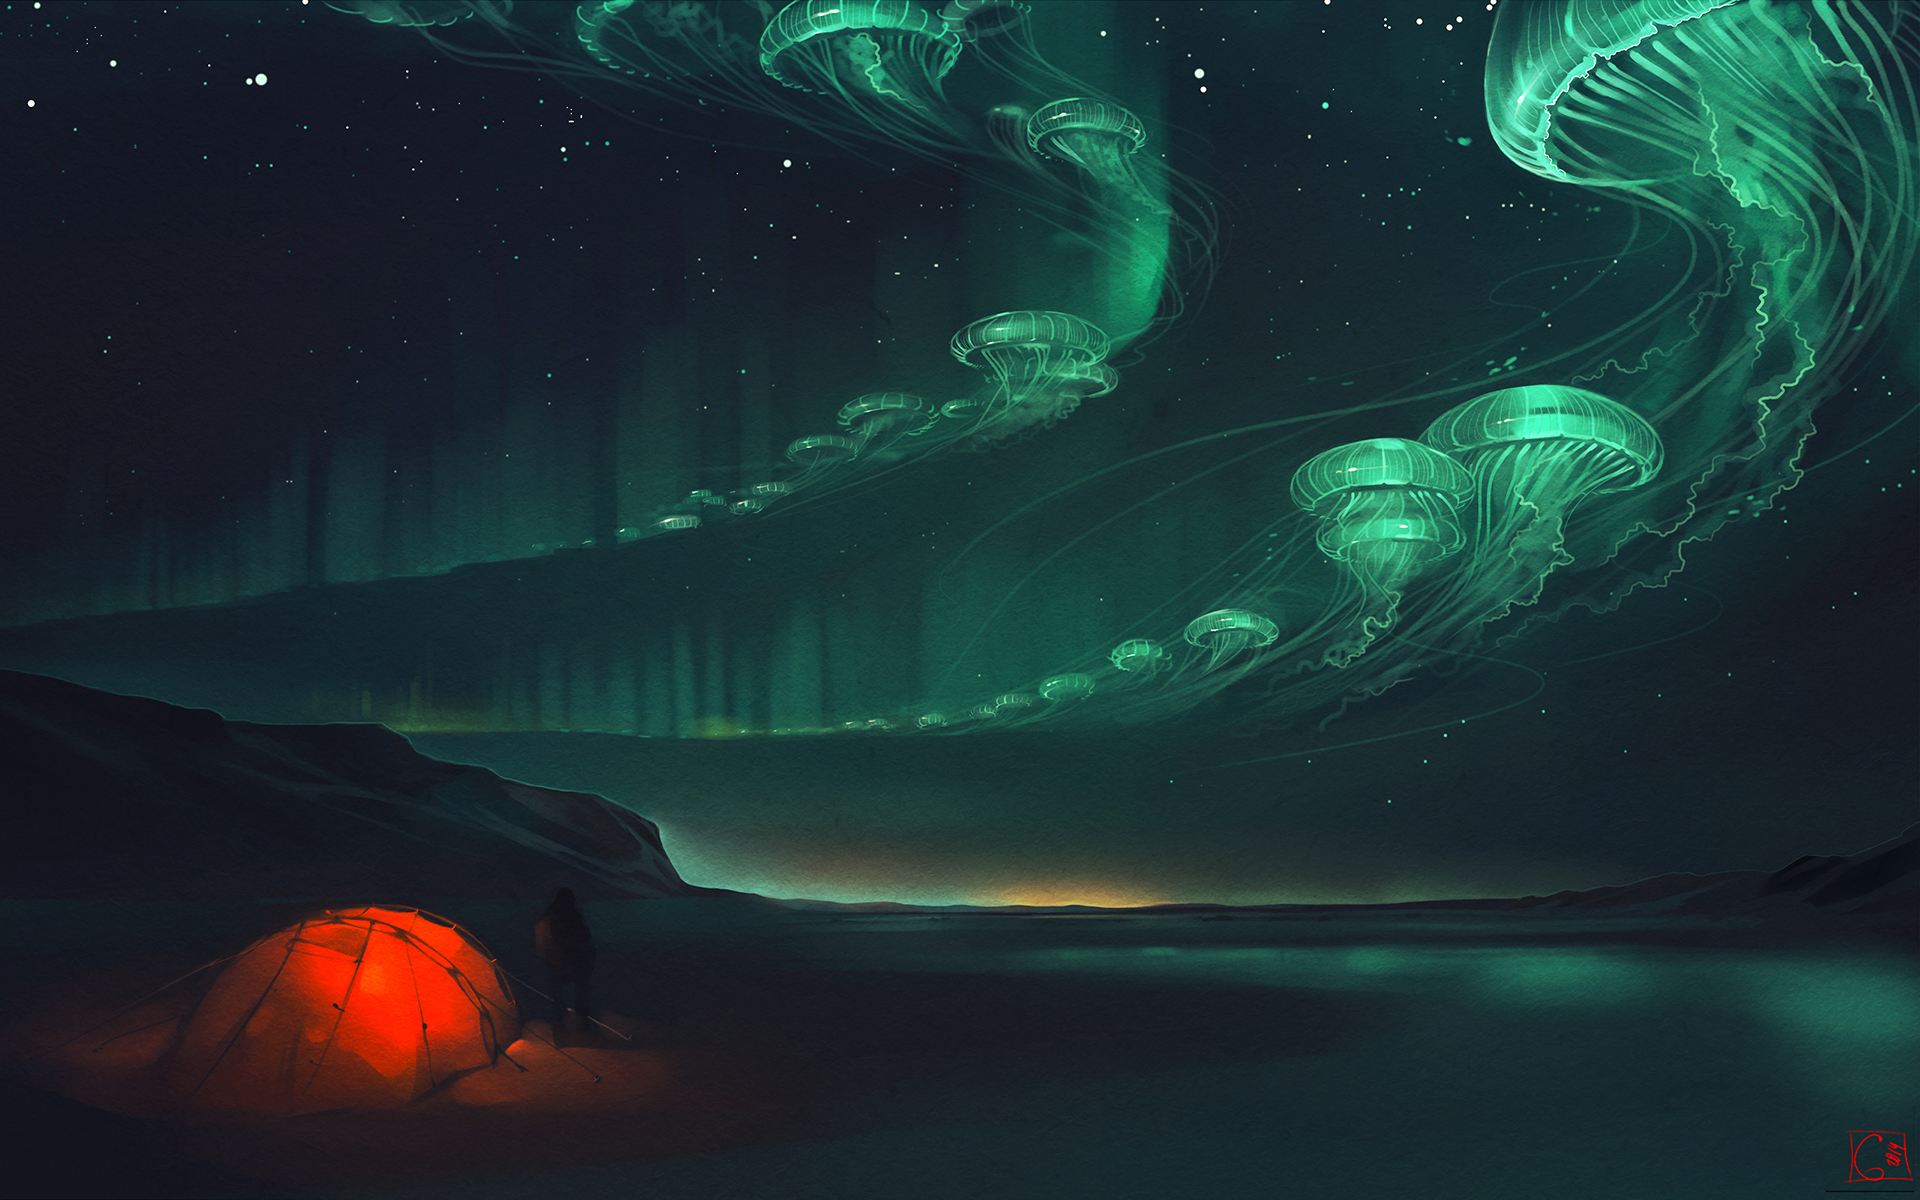 Artwork Fantasy Art Surreal Tent Jellyfish Glowing Aurorae Camping Night Stars Mountains 1920x1200